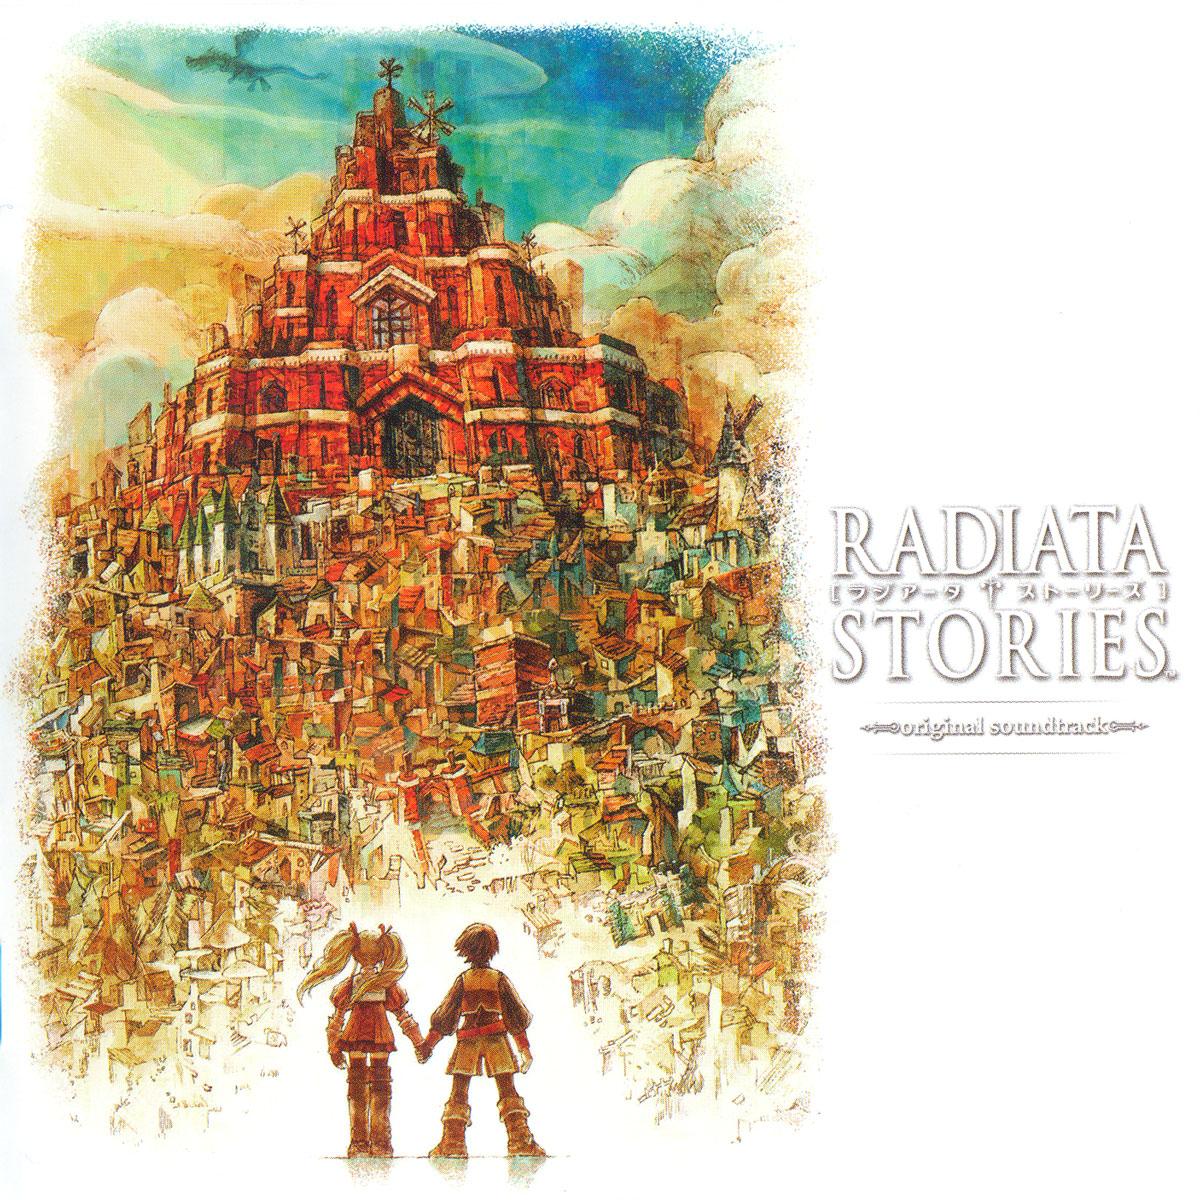 Radiata stories. DVD Radiata stories. Story soundtrack